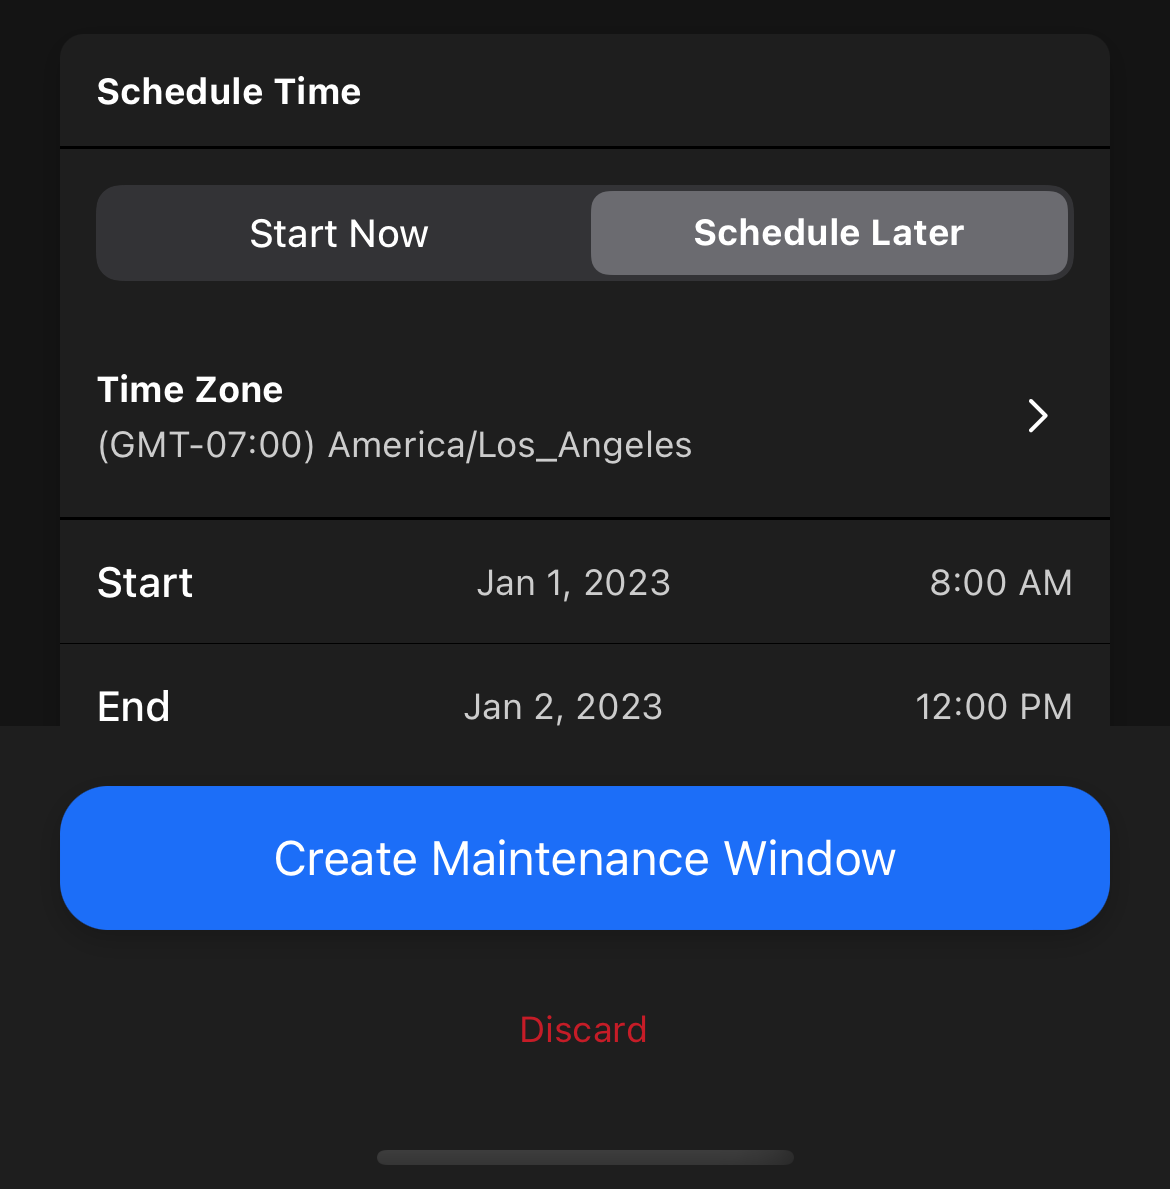 Schedule a maintenance window later